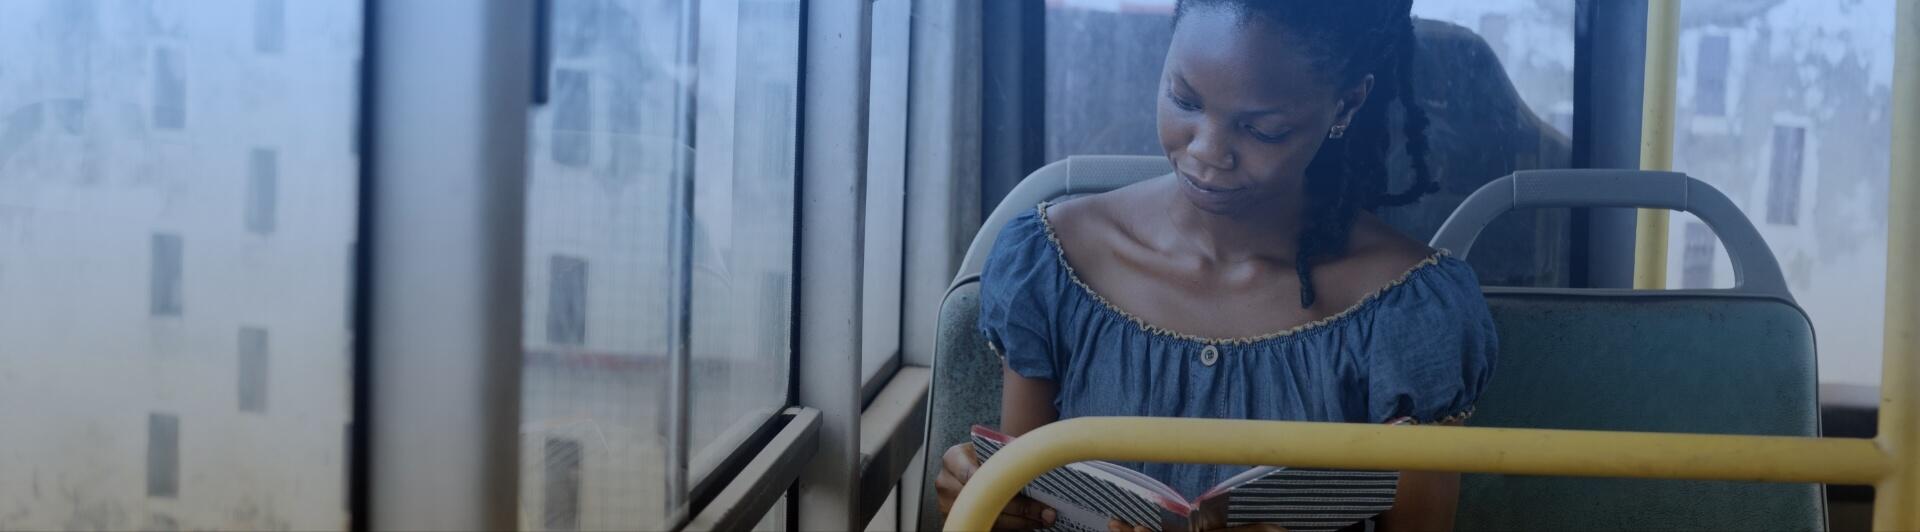 Woman Reading on Public Transport